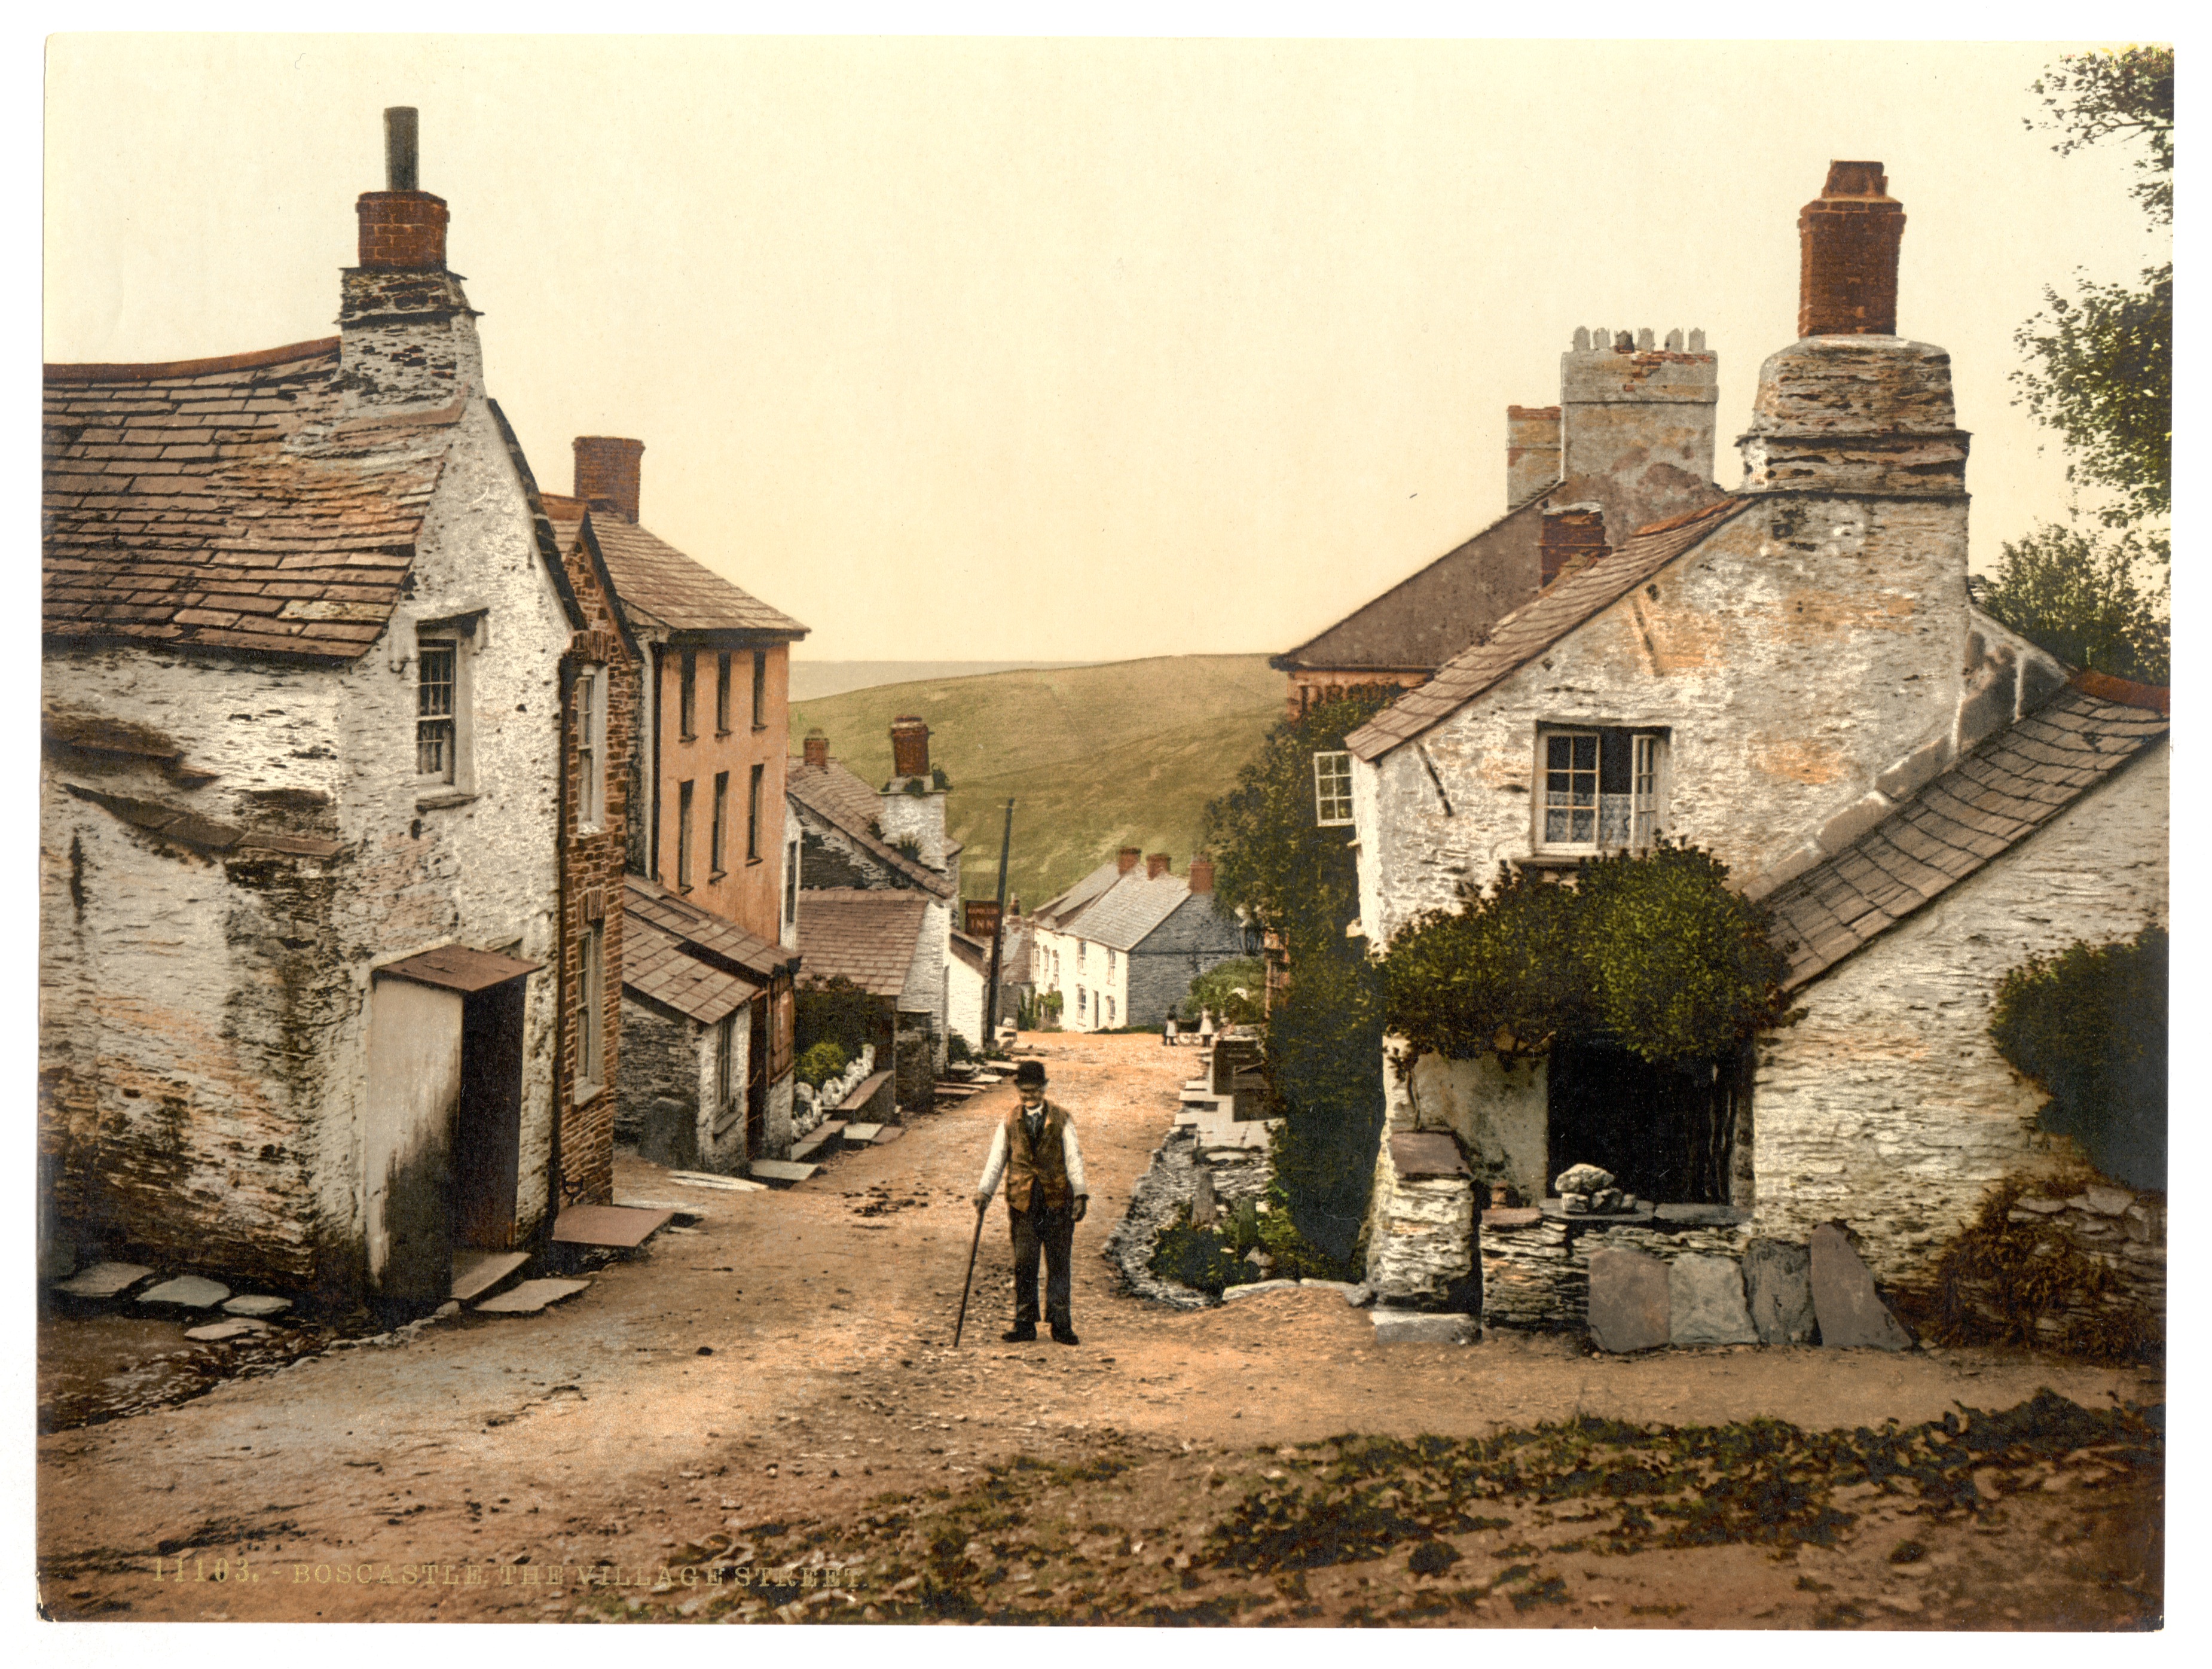 Старые европейцы. Корнуолл Англия Англия. Британия деревня 19 век. Англия графство Корнуэлл. Провинция Франции 19 век.